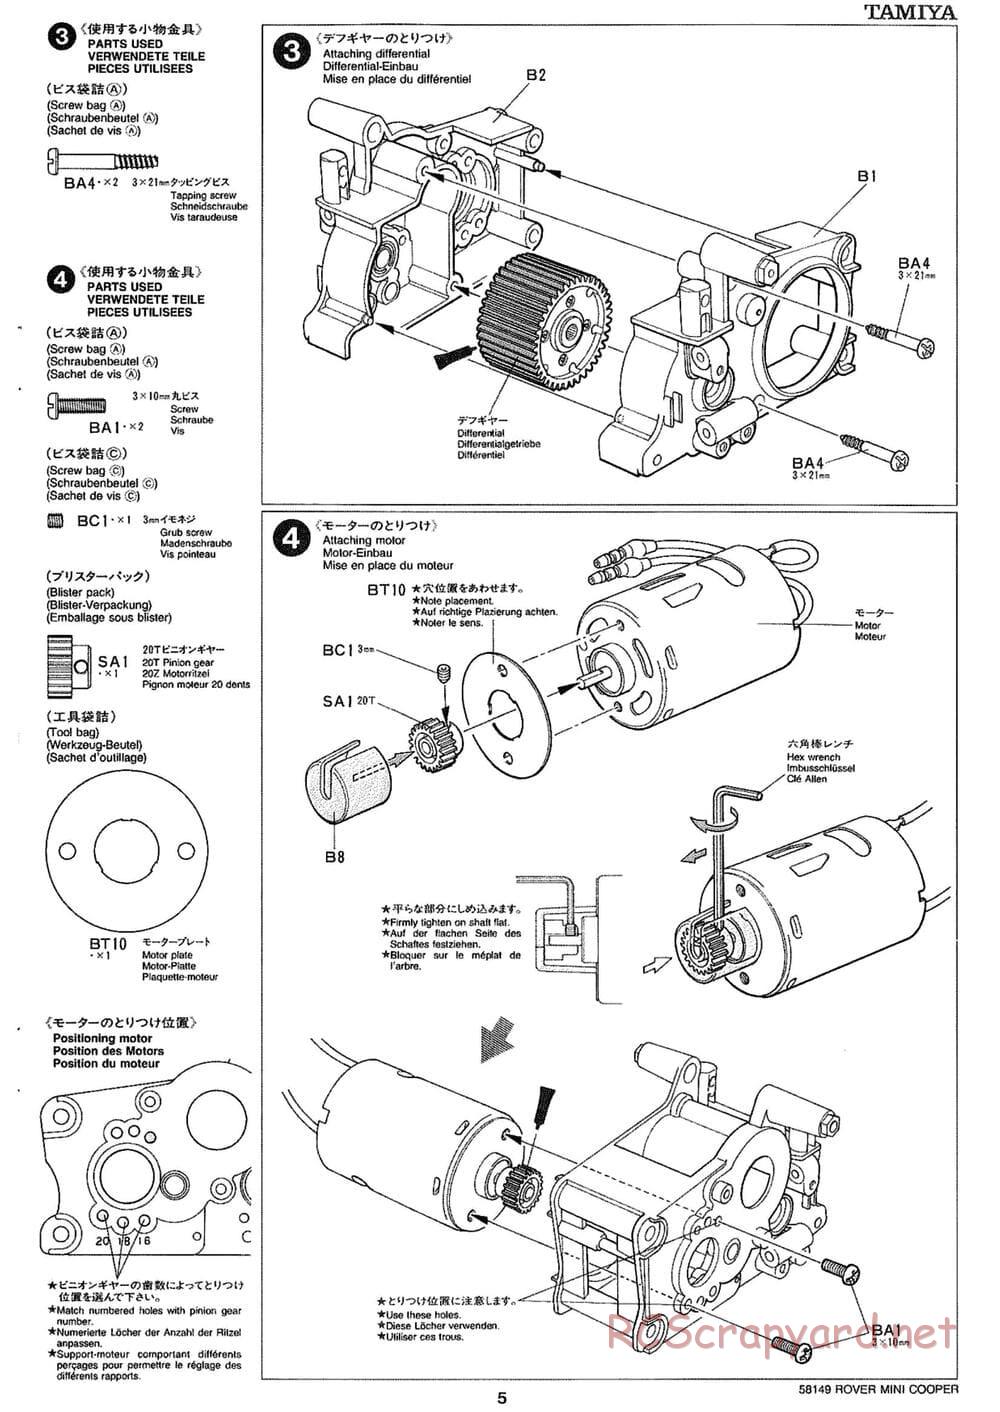 Tamiya - Rover Mini Cooper - M01 Chassis - Manual - Page 5